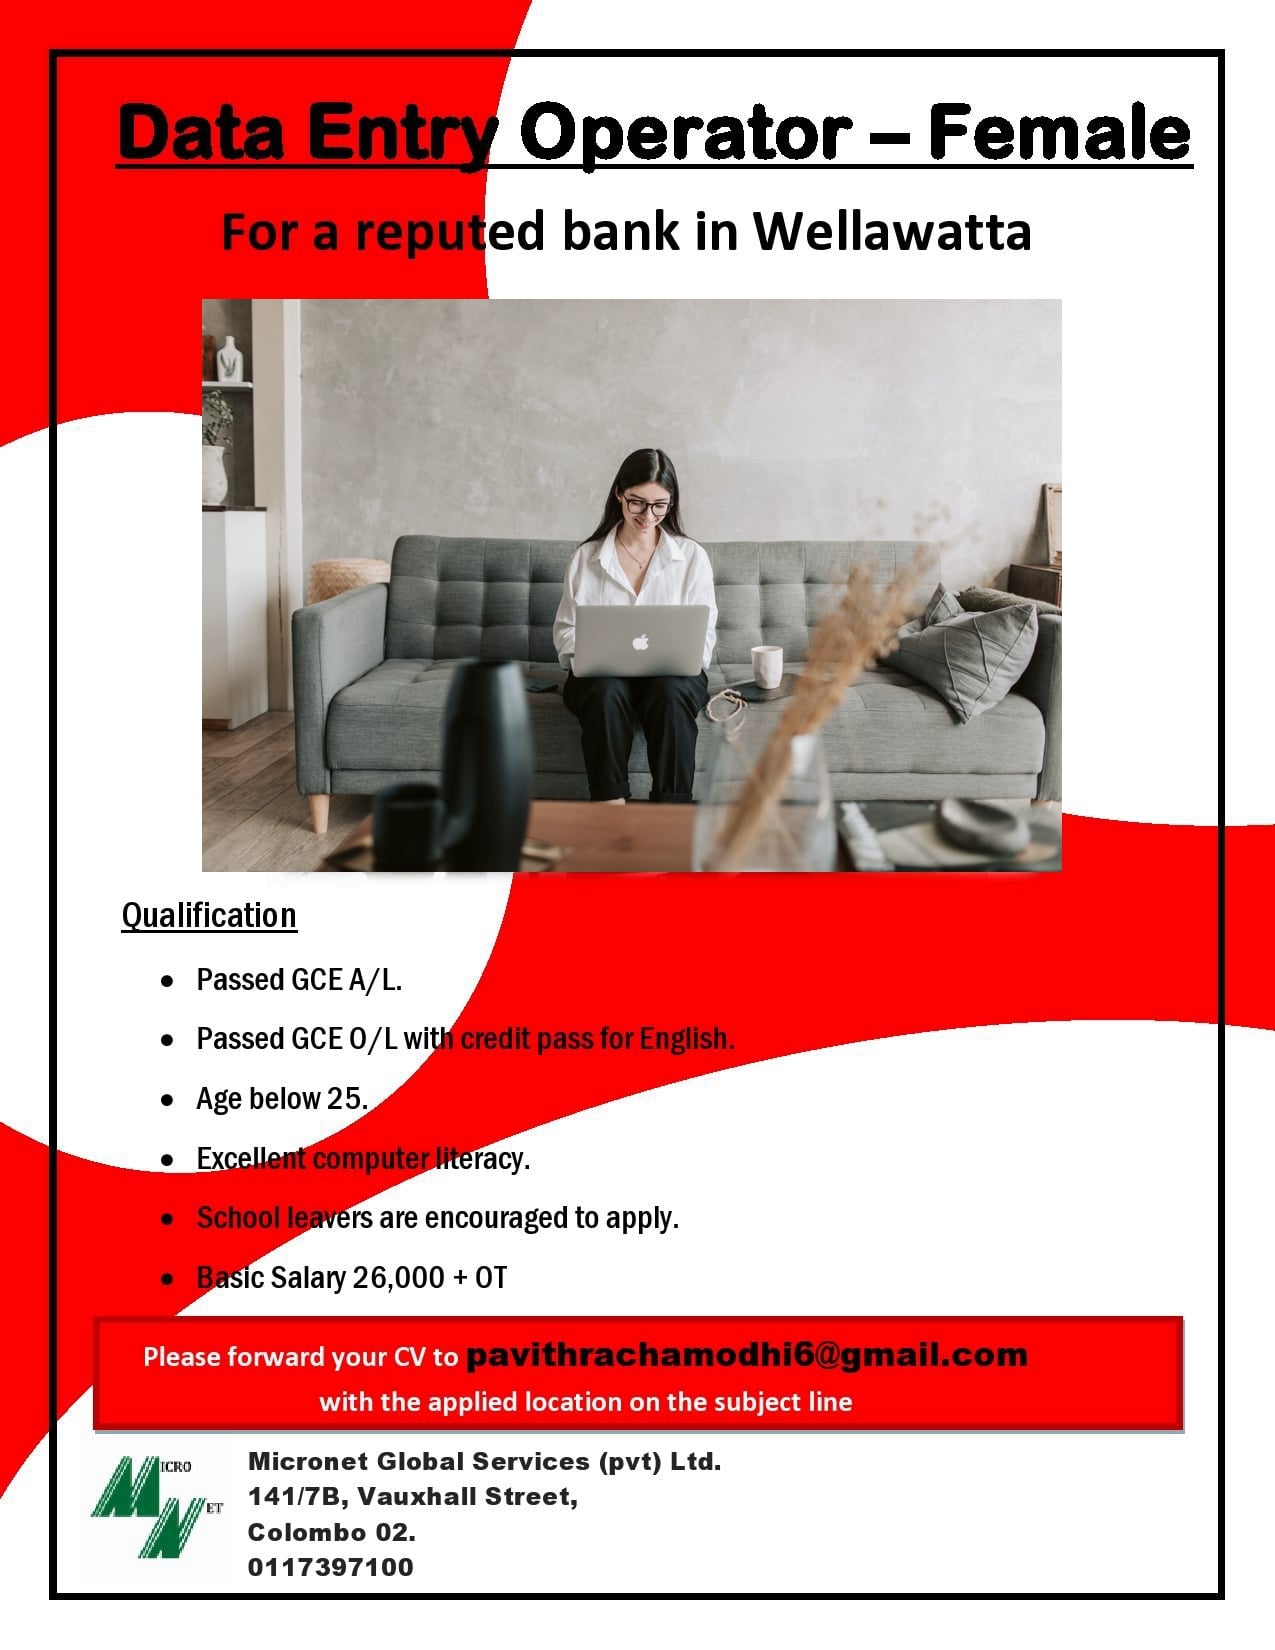 Female Bank Data Entry Operator Job Vacancy in Wellawatte Jobs Vacancies